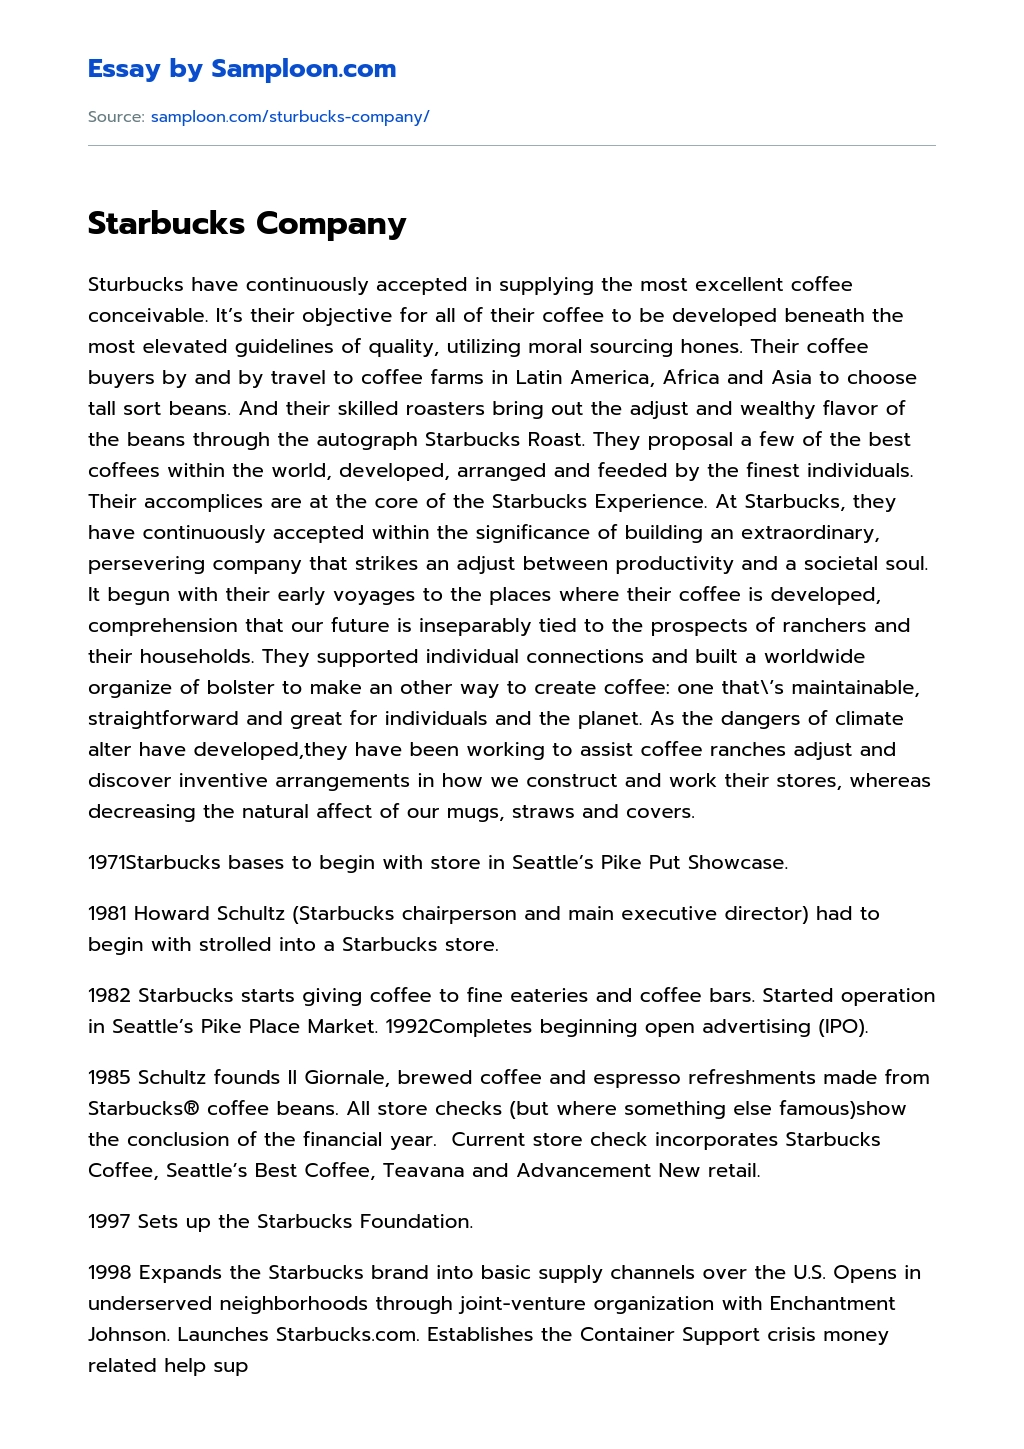 Starbucks Company essay